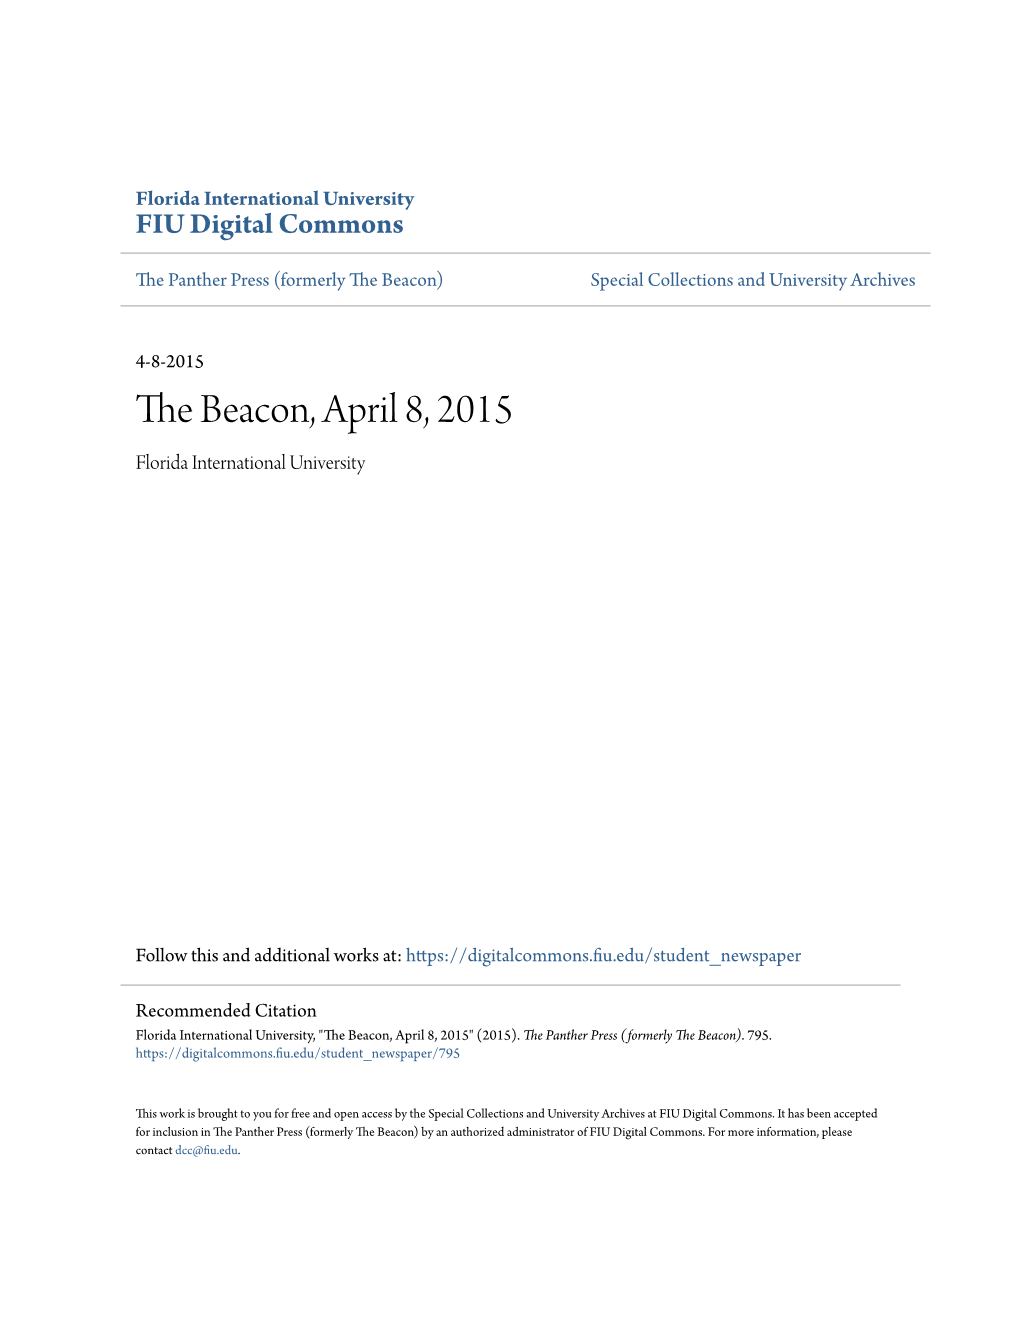 The Beacon, April 8, 2015 Florida International University